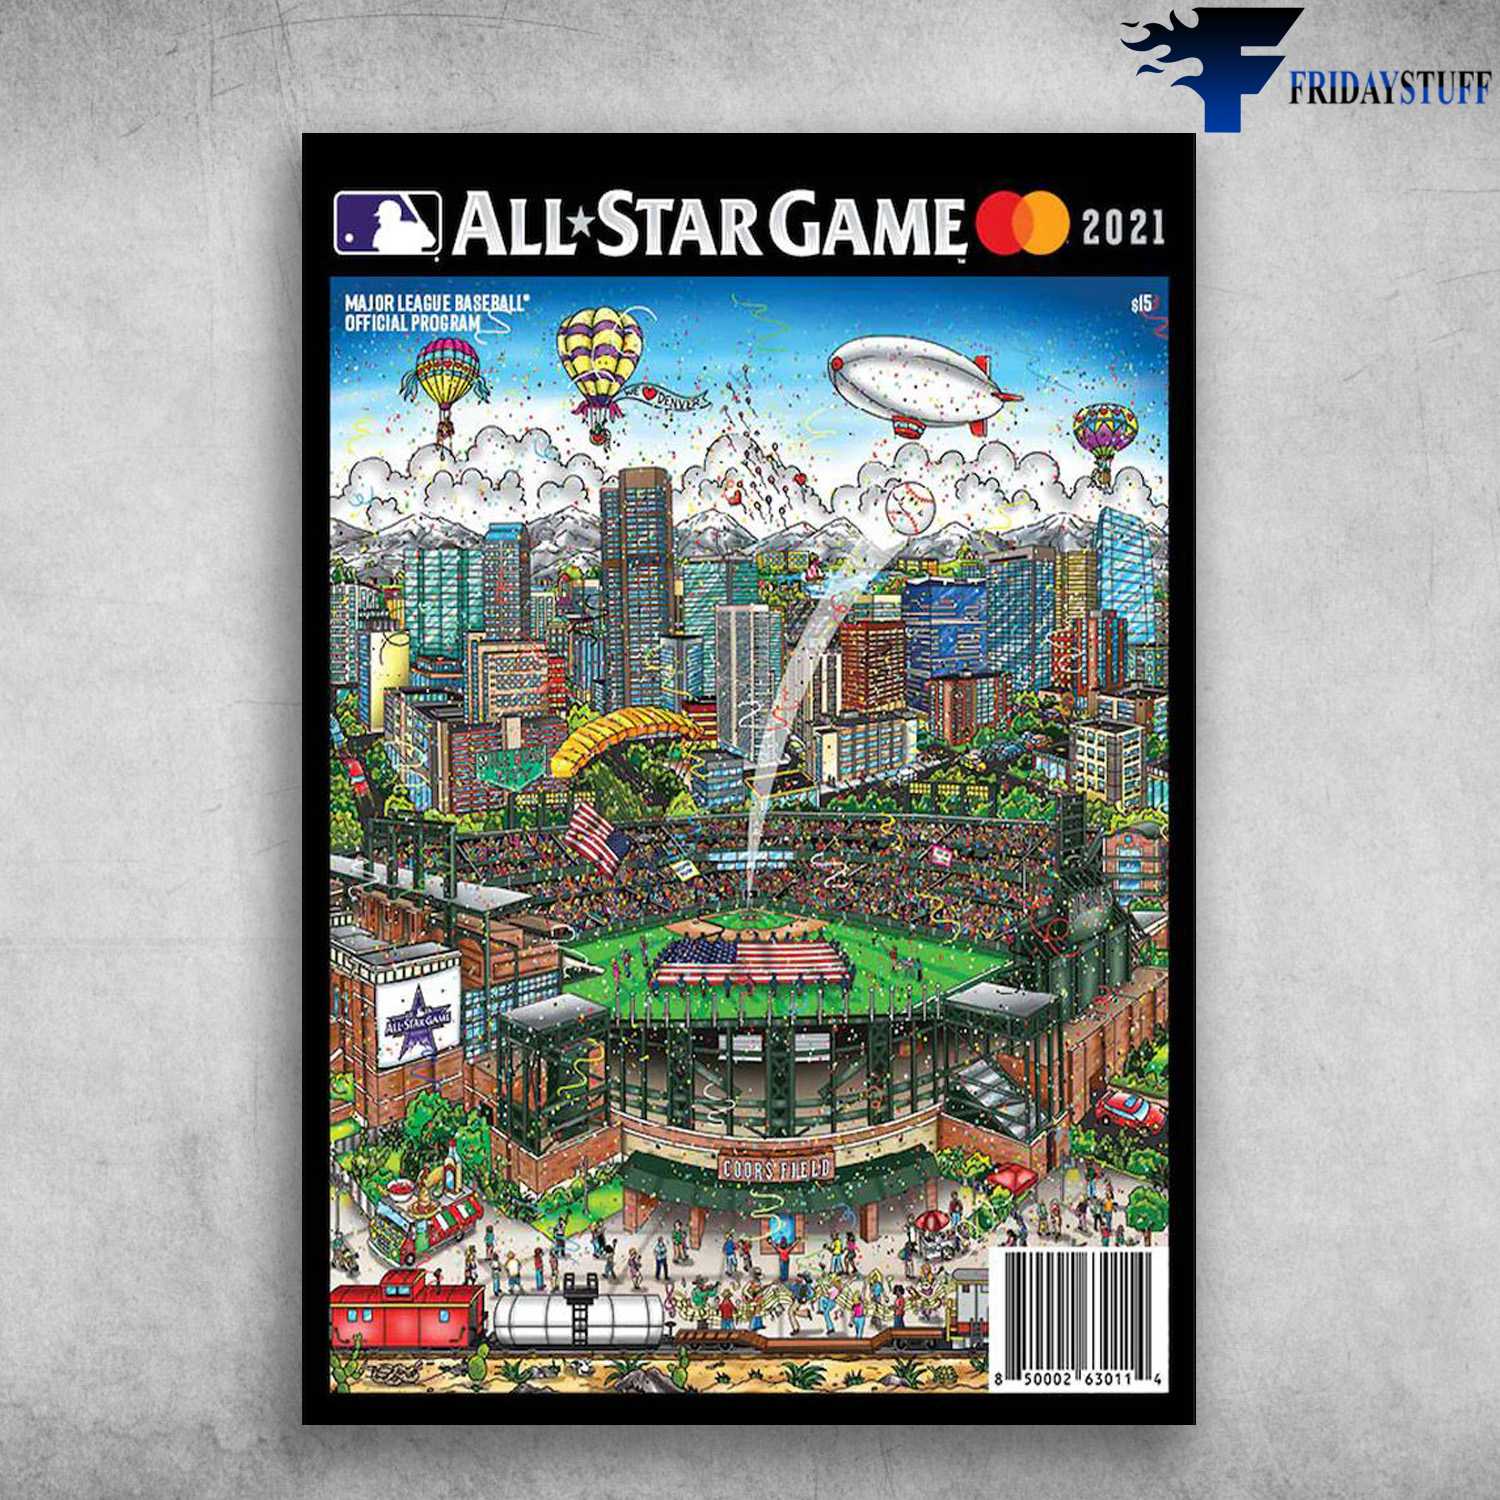 All Star Game 2021 - Major League Baseball, Official Program, American Baseball